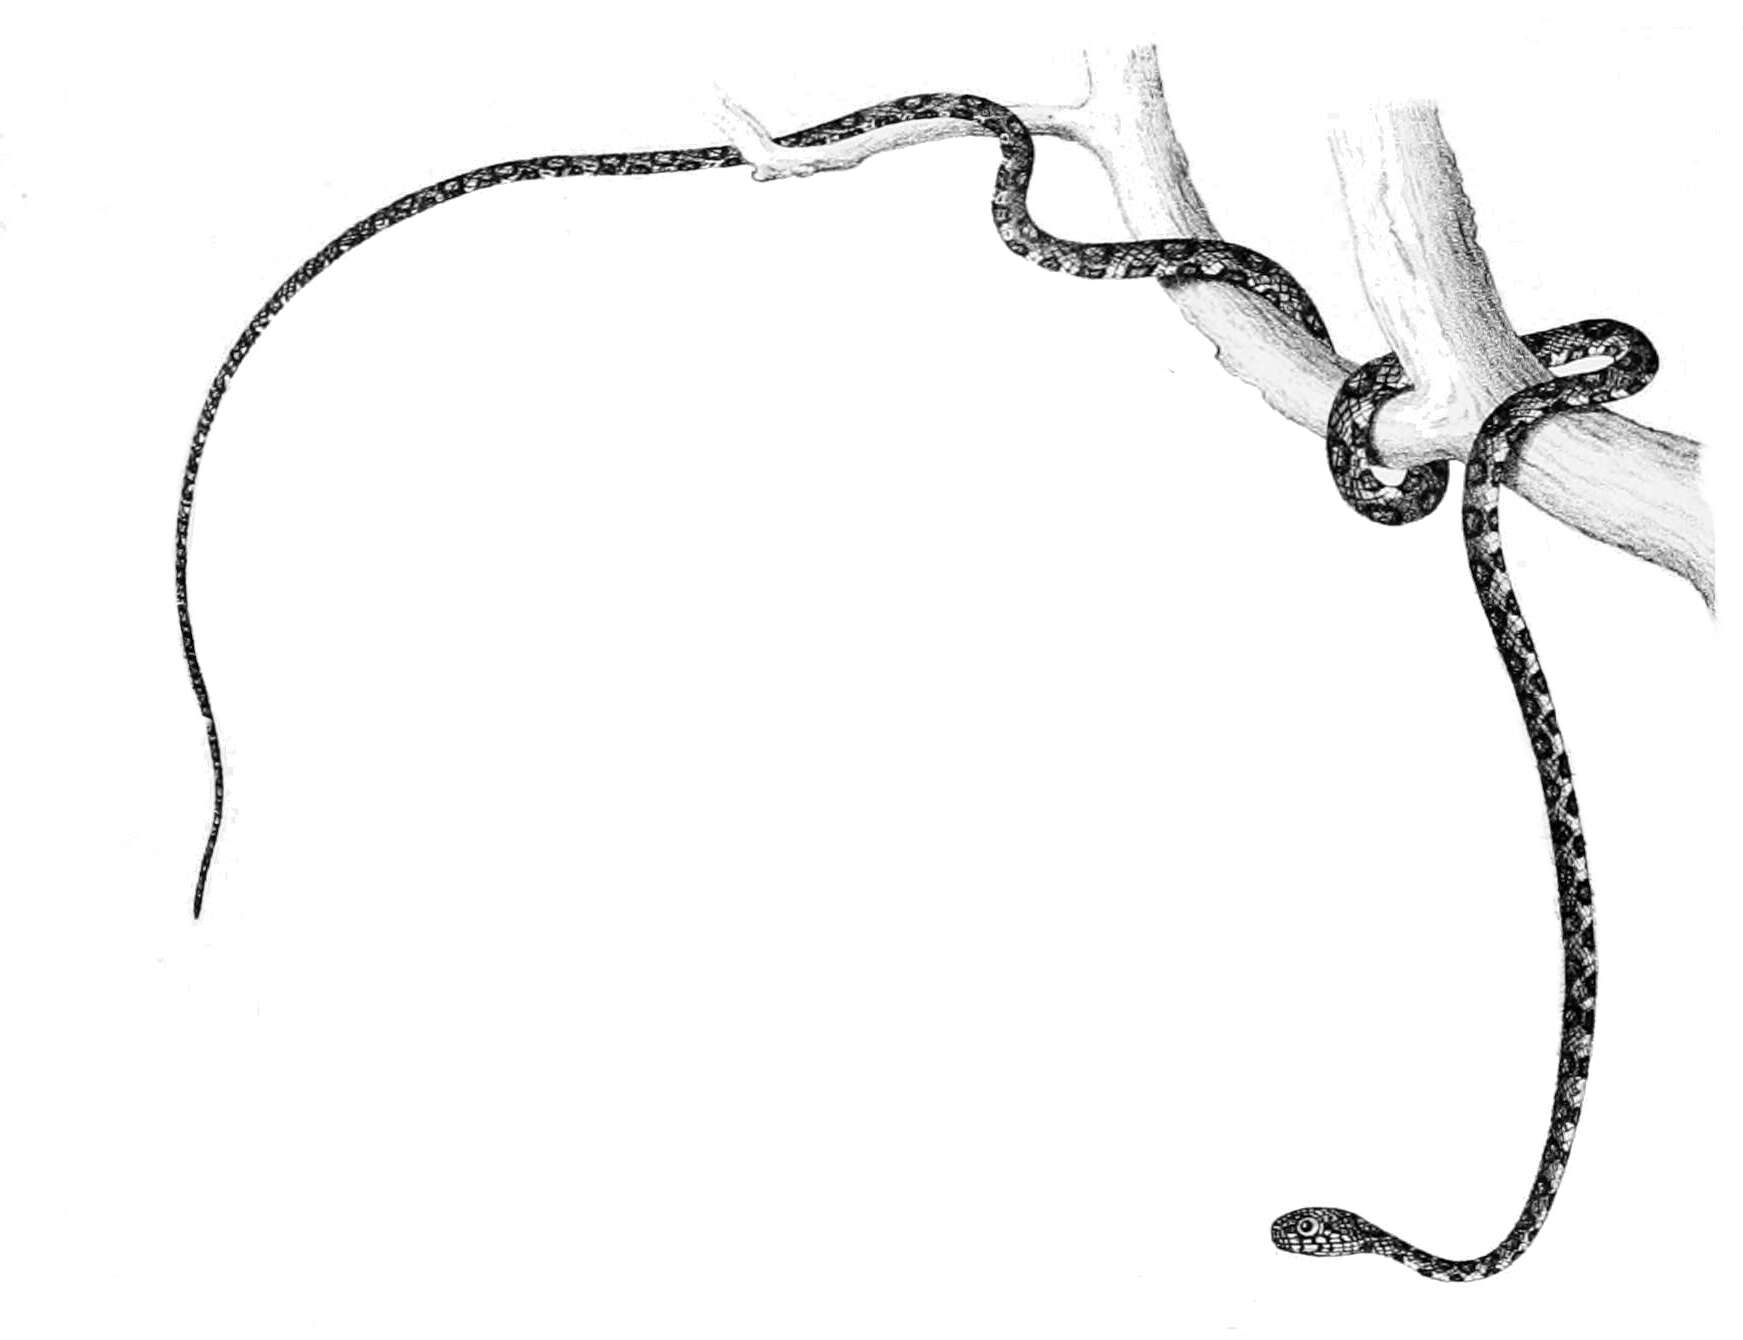 Sibon argus (Cope 1876) resmi